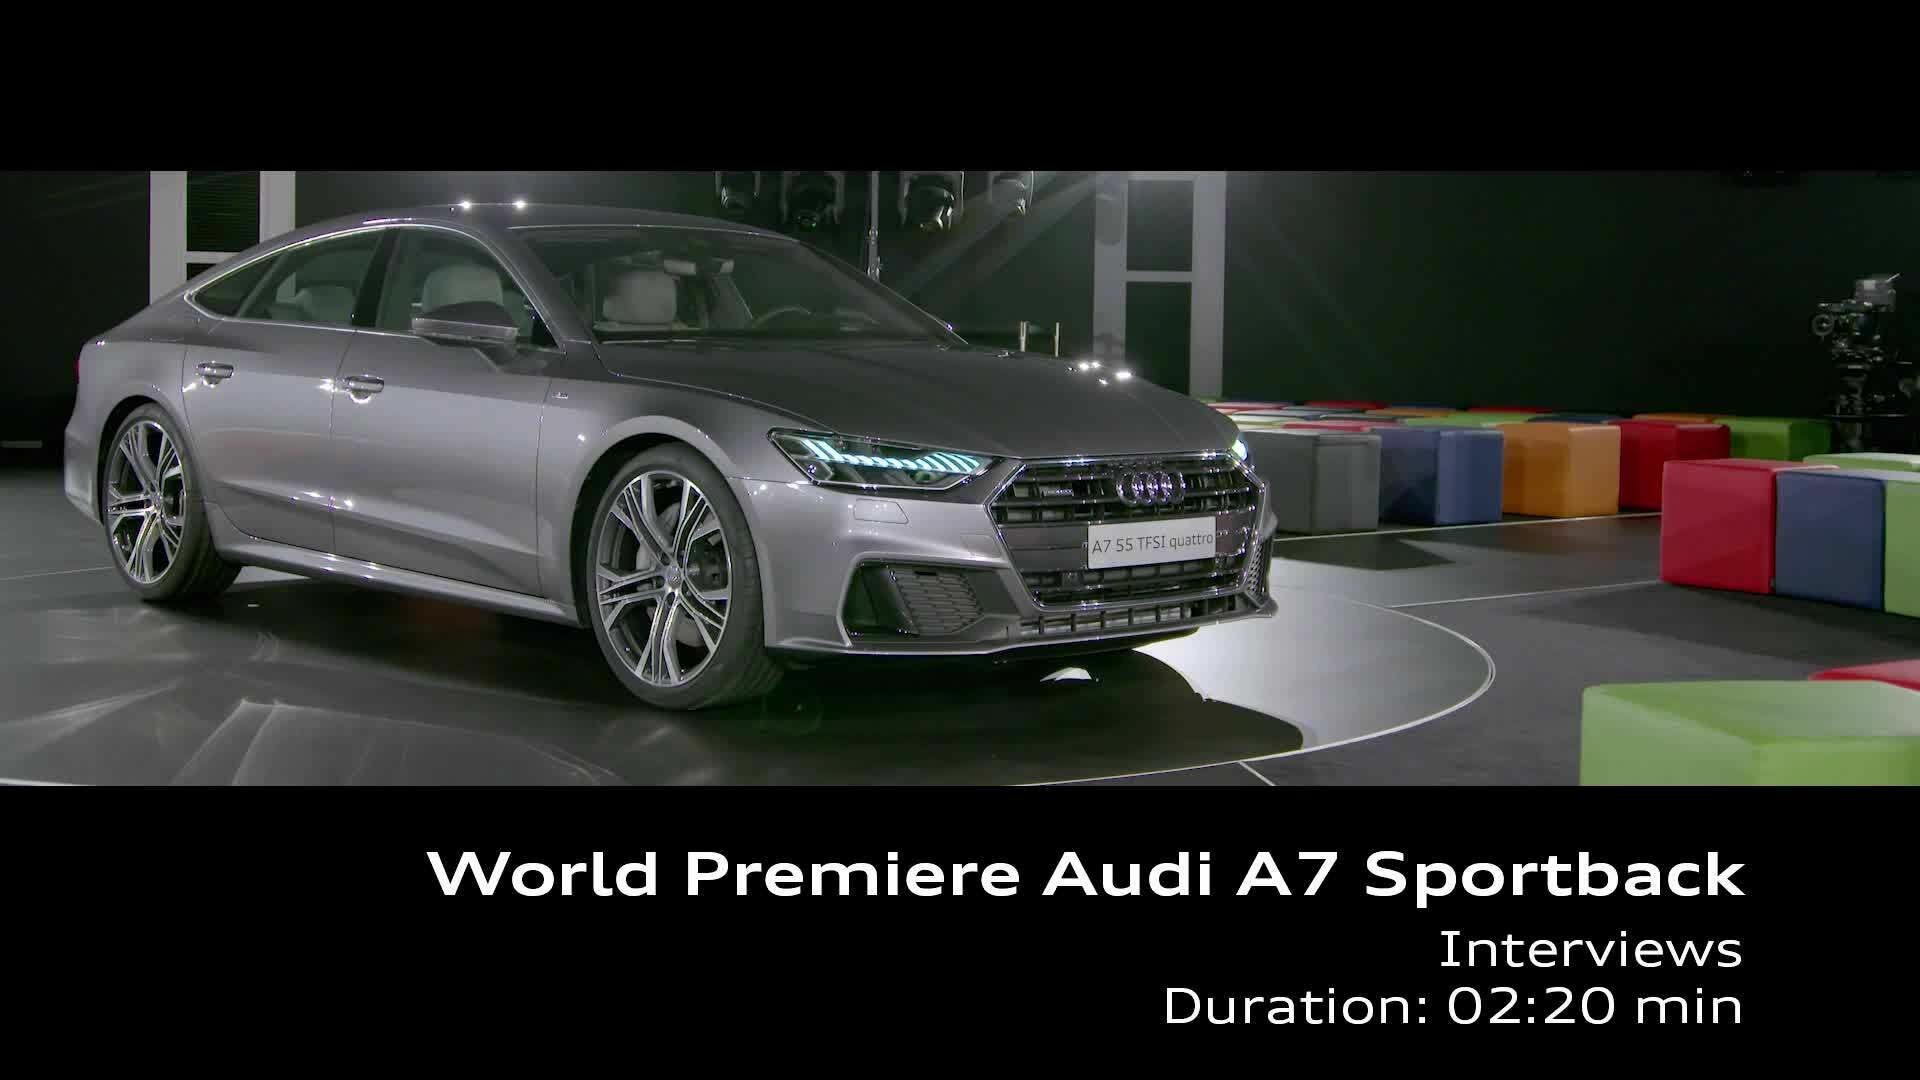 Audi A7 Weltpremiere Interviews Stadler, Mertens, Lichte